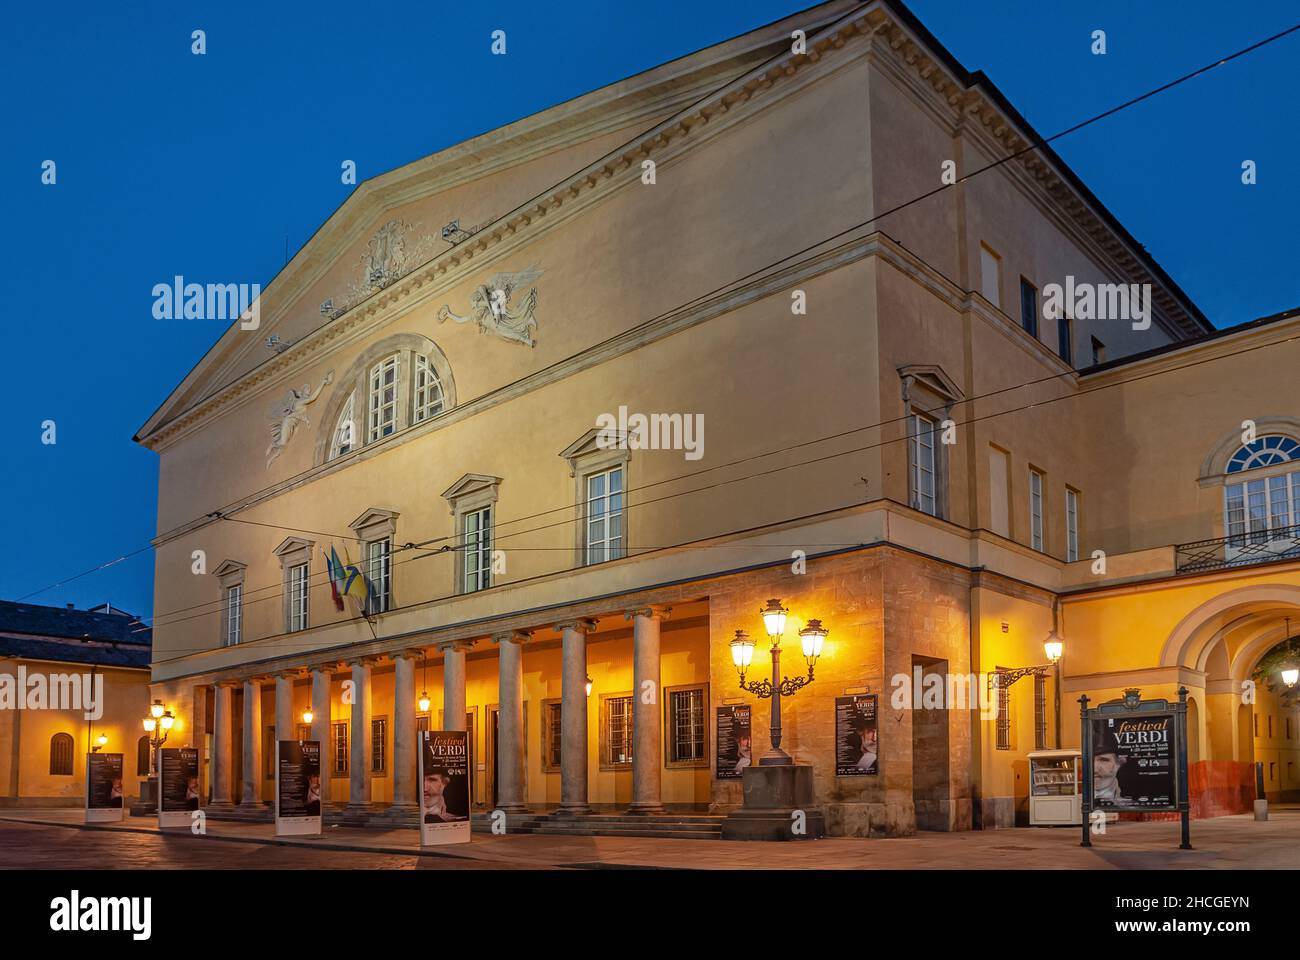 Teatro Regio di Parma, a famous 19th century opera house and opera company in Parma, Italy. Stock Photo